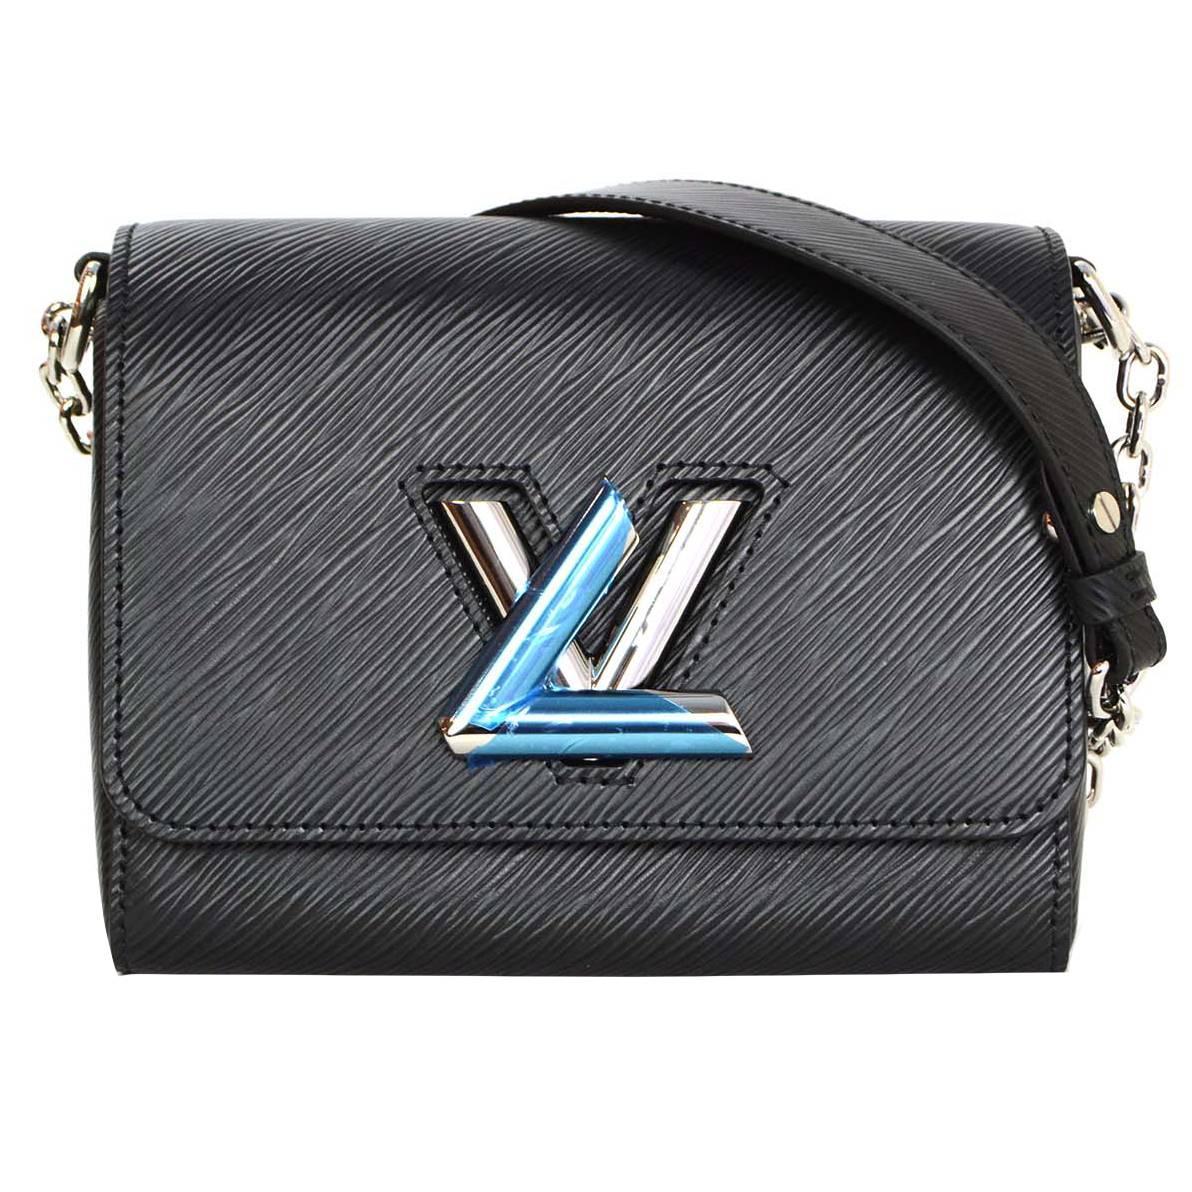 Louis Vuitton NEW Black Epi Twist PM Bag SHW rt. $3,250 at 1stdibs